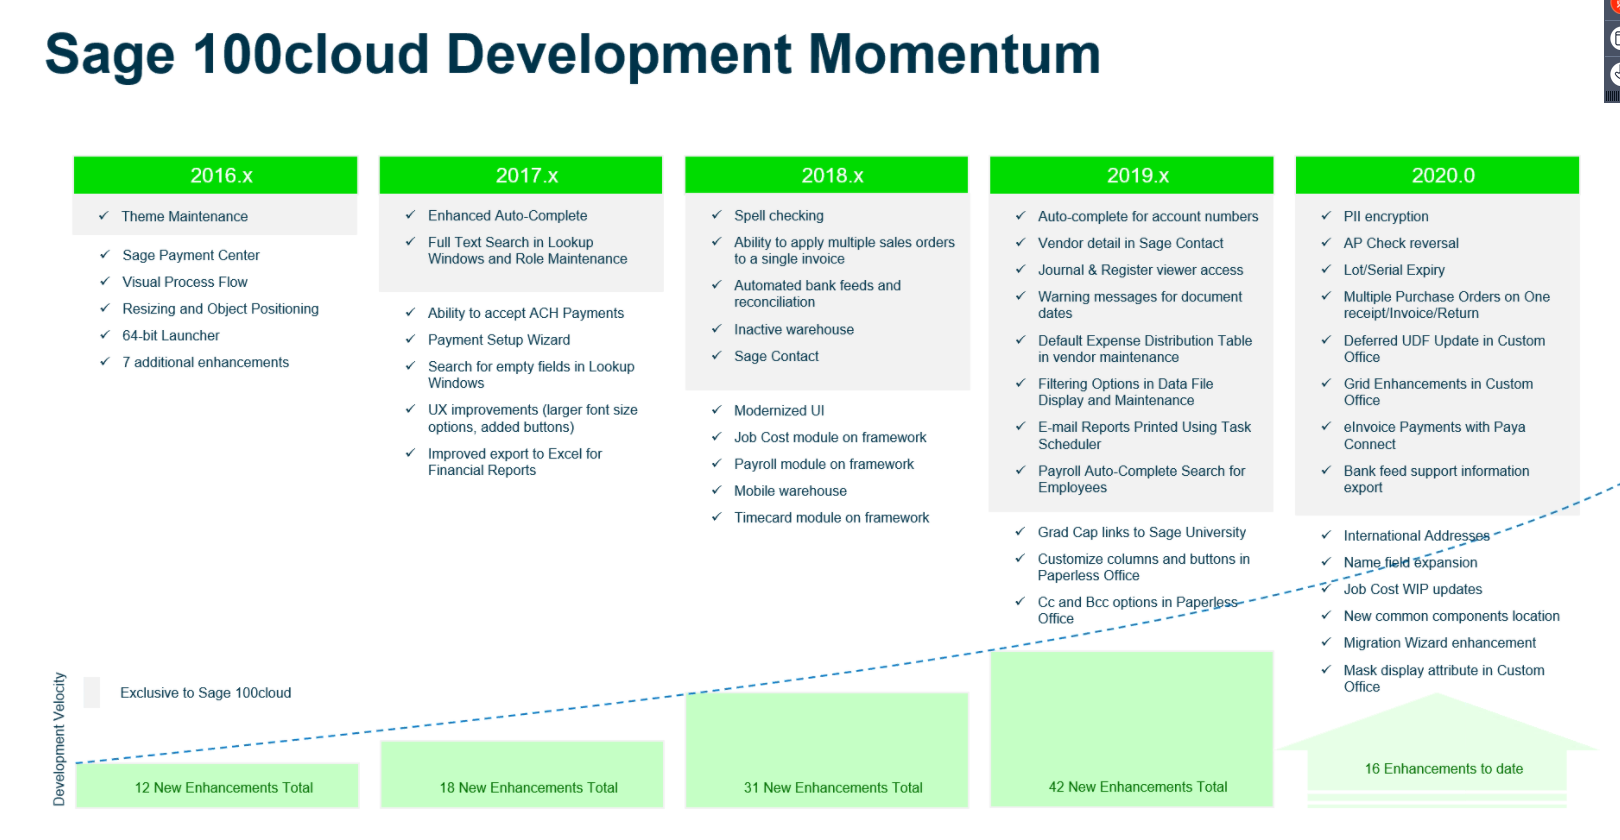 Sage 100 cloud 2020 roadmap development